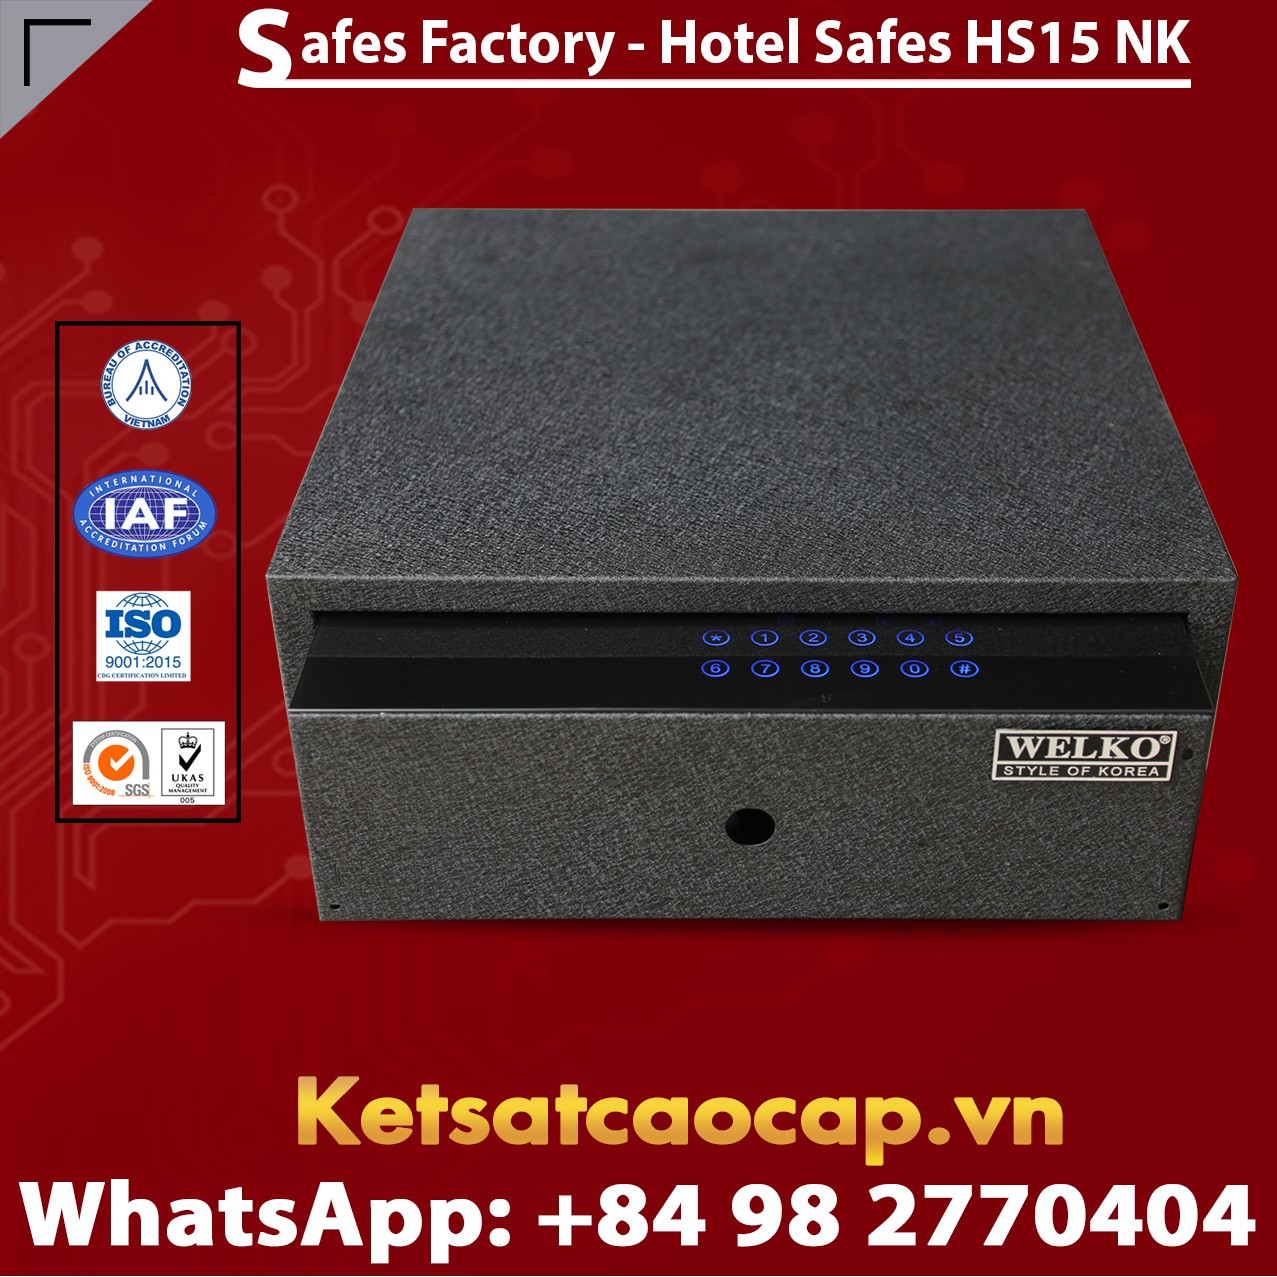 Hotel Safe Brands WELKO HS15 NK